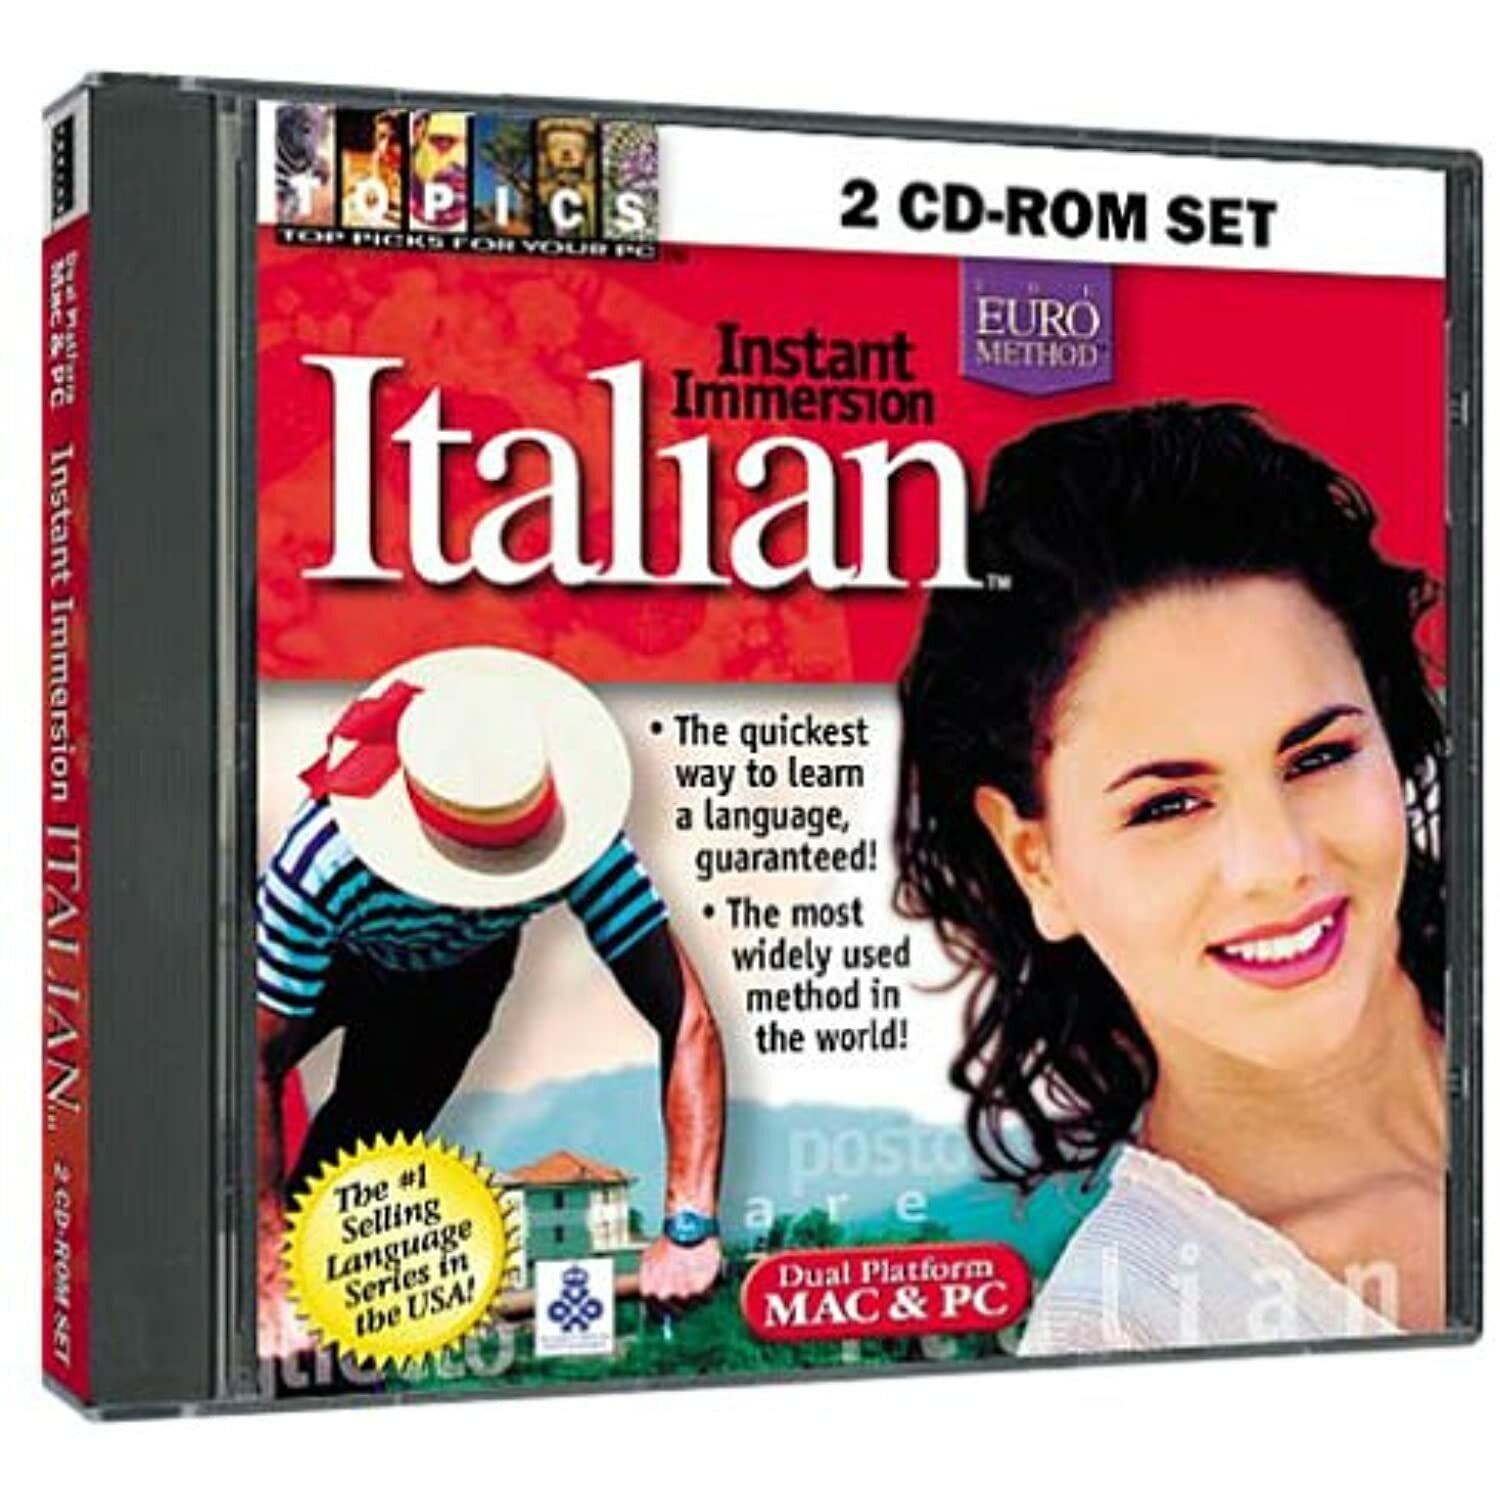 Instant Immersion Italian 2 CD-ROM Set (Jewel Case)